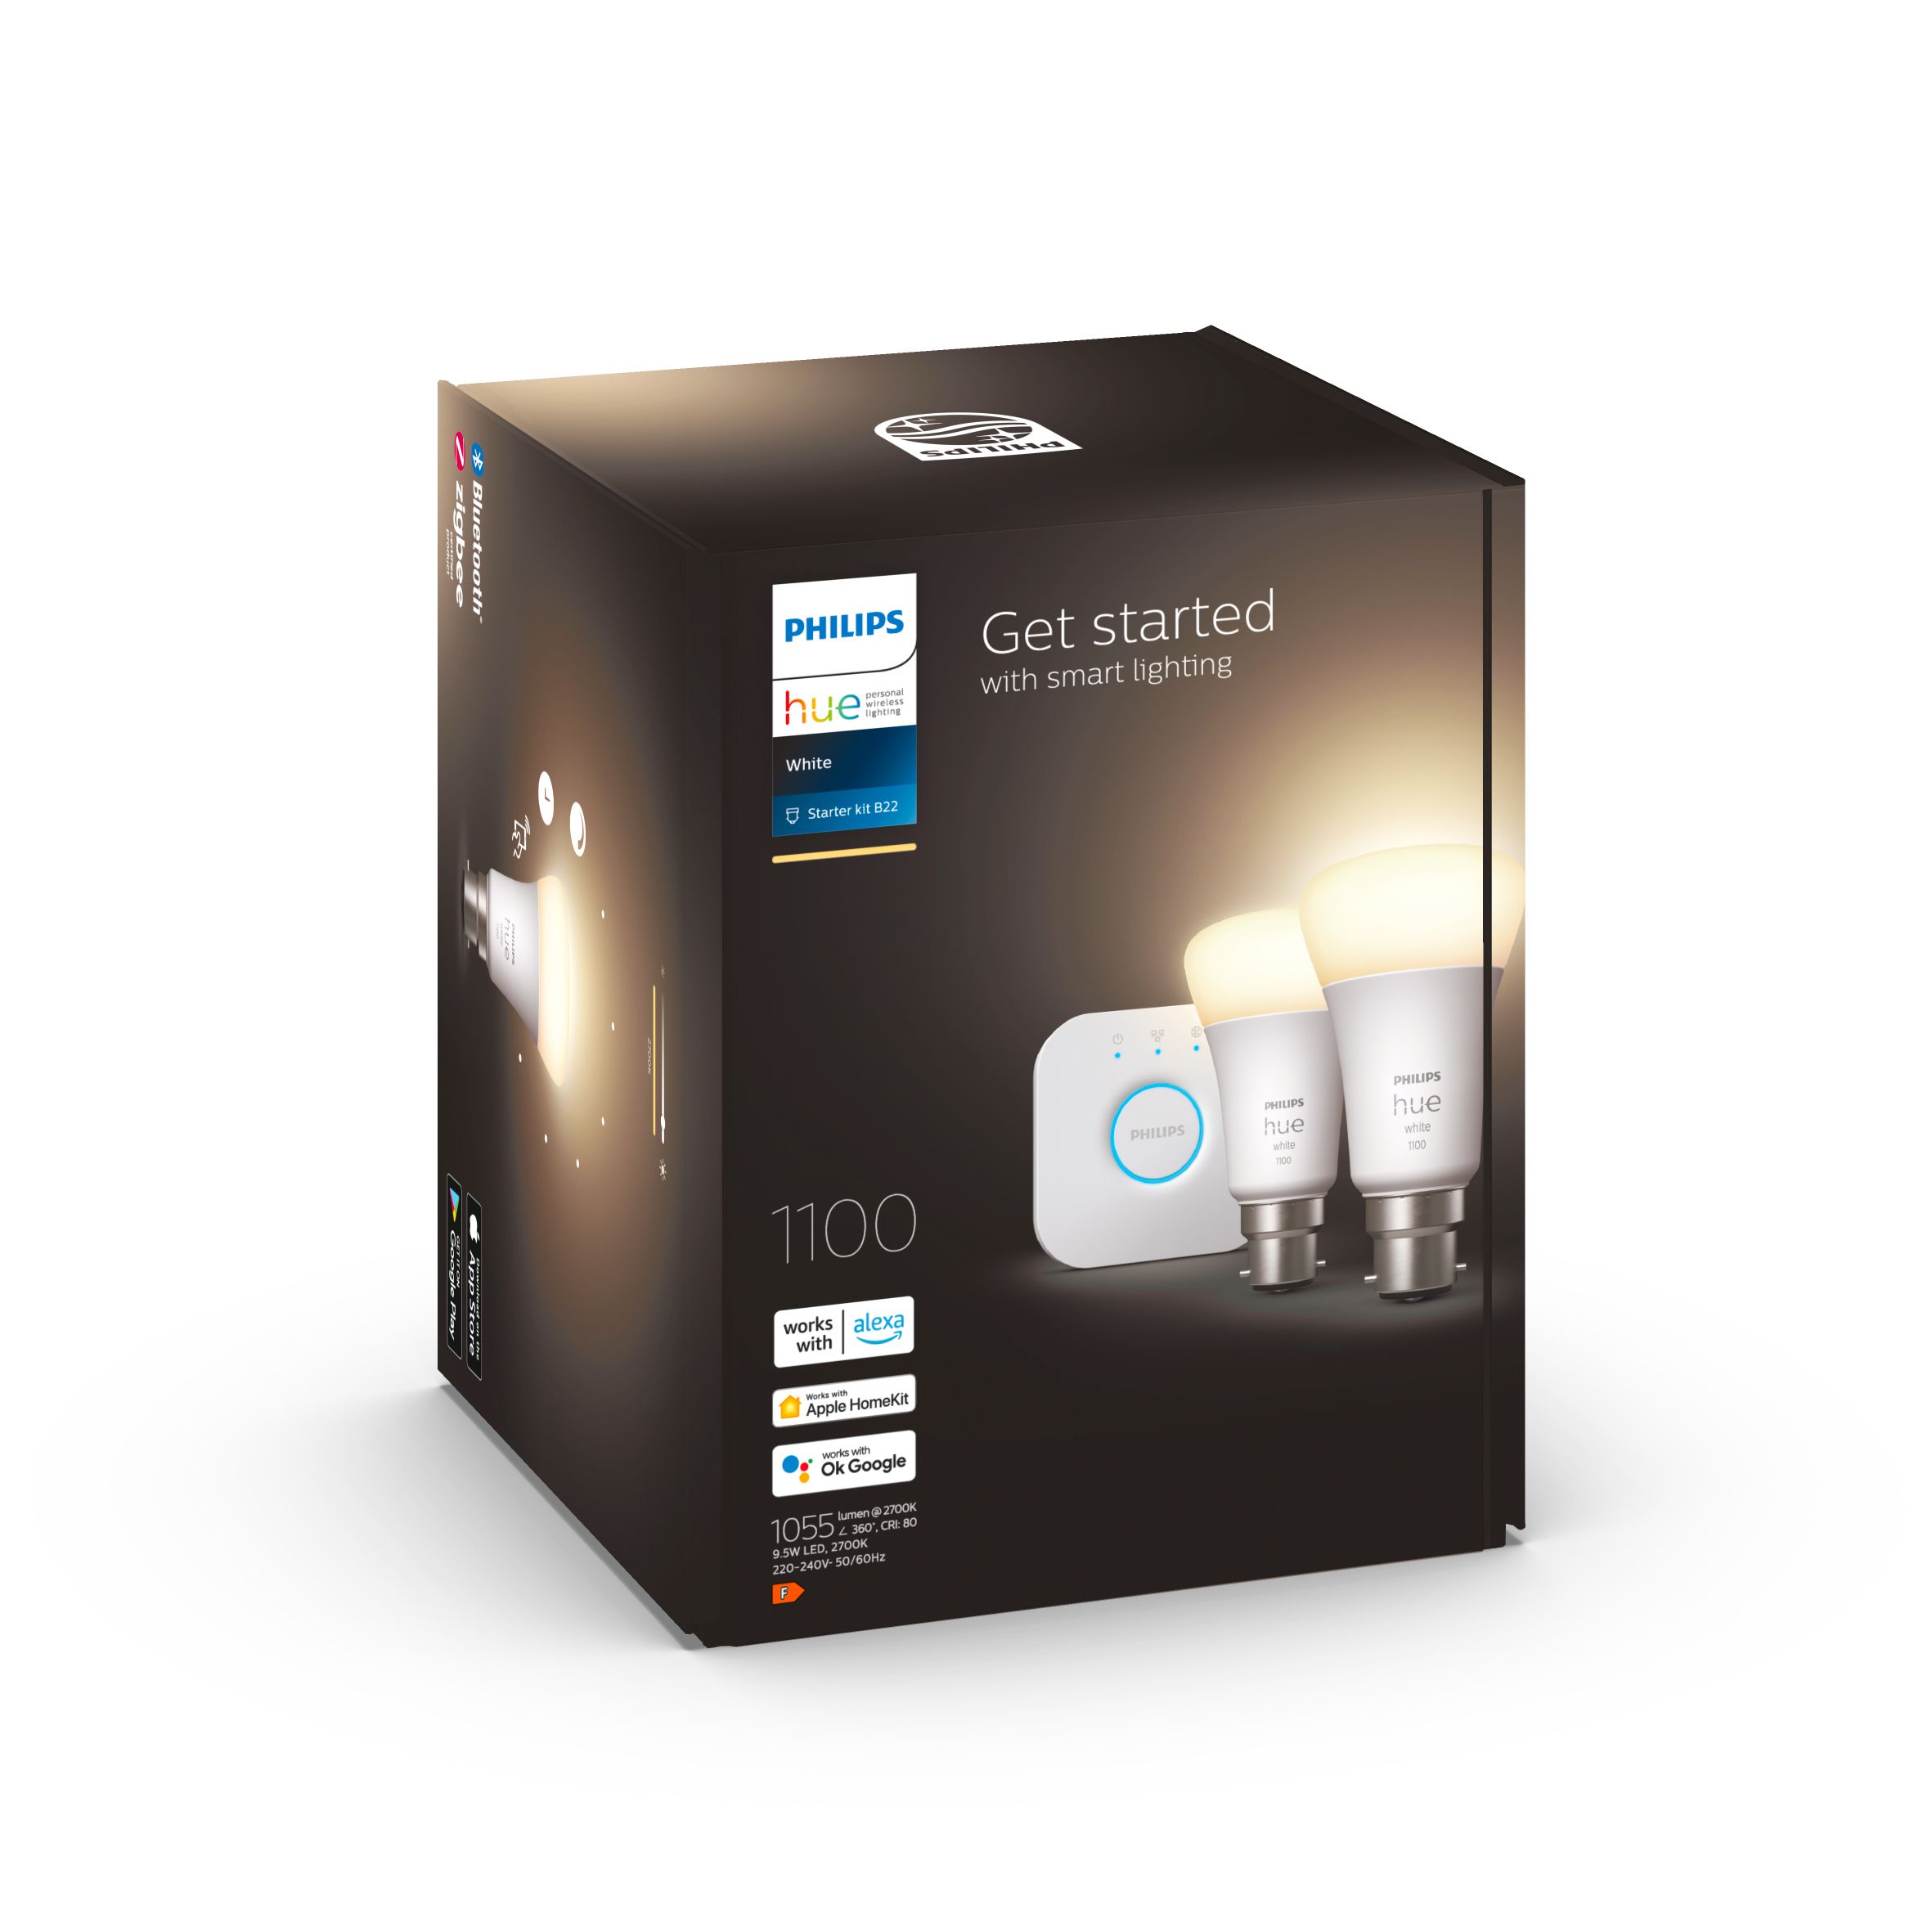 Philips B22 LED Cool white & warm white A60 Non-dimmable Smart lighting starter kit